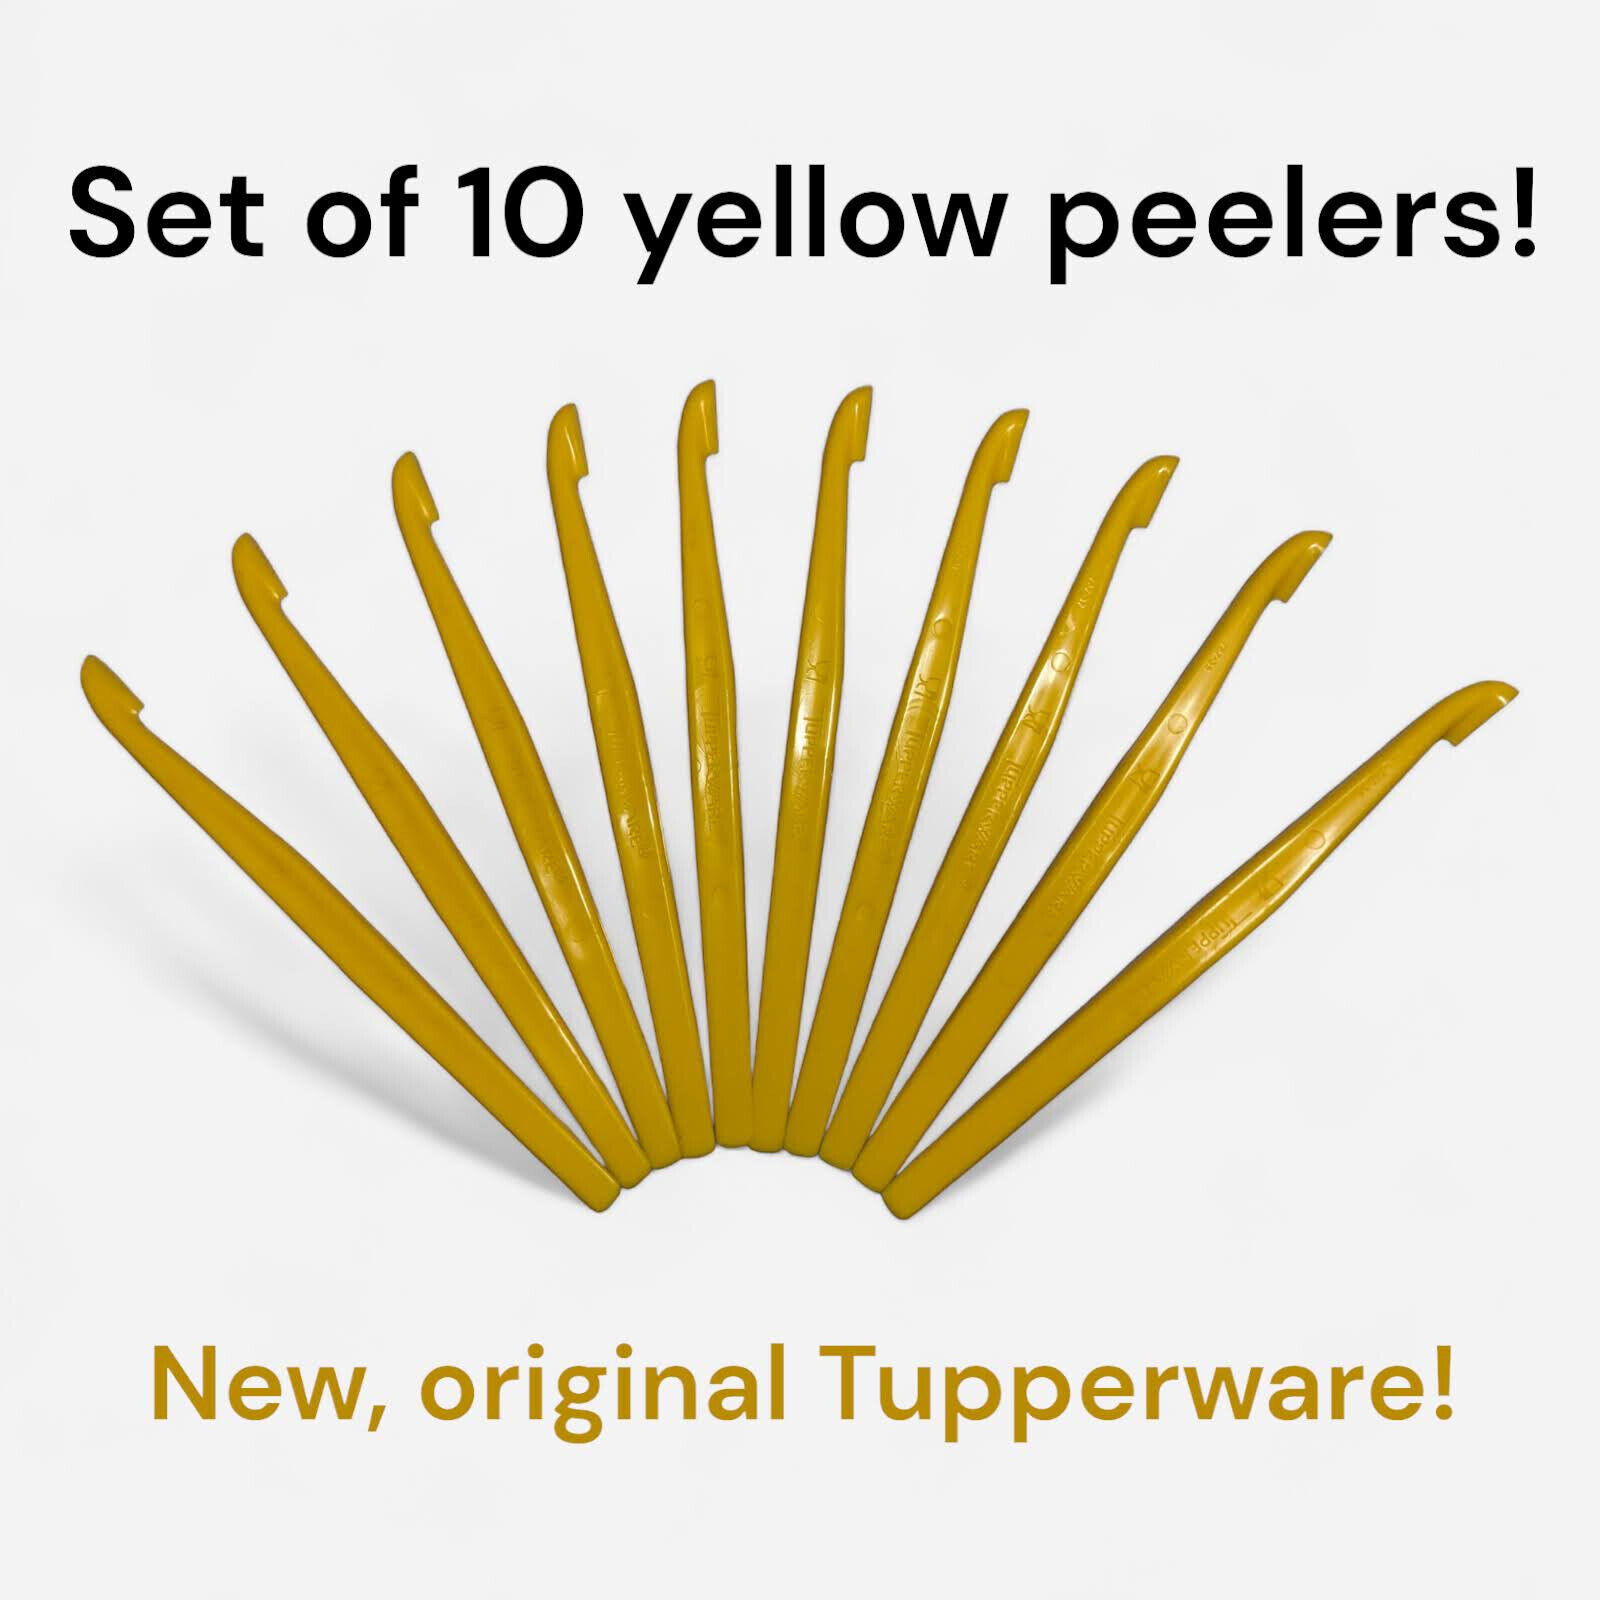 Original New Tupperware Citrus Peelers Yellow Set of 10 Pcs